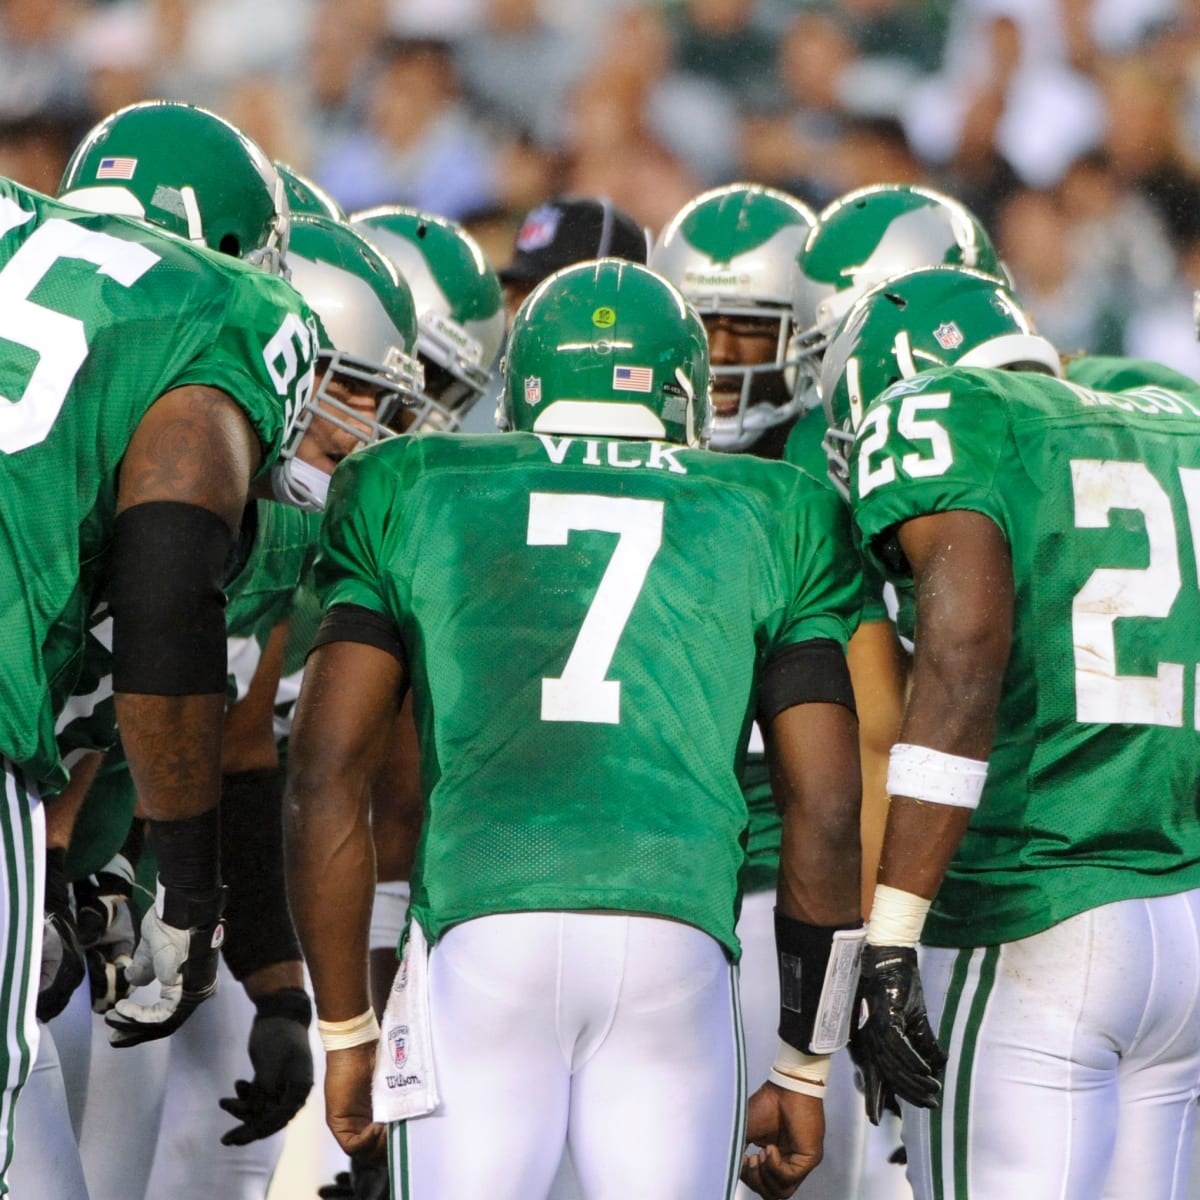 Philadelphia Eagles' Kelly green uniforms to return in 2023